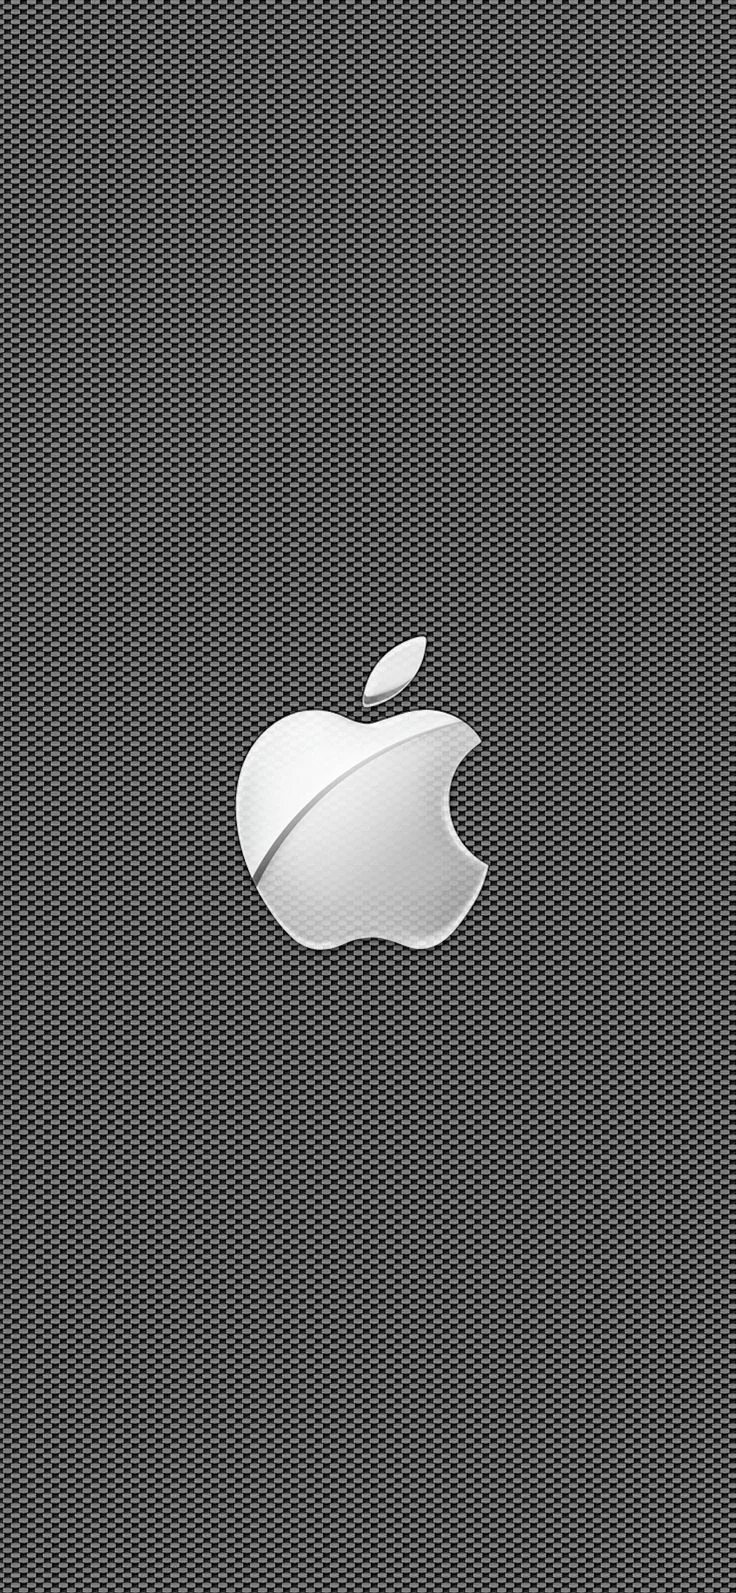 Ios на айфон 6. Логотип Apple. Обои на айфон. Обои Apple. Маленький логотип Apple.